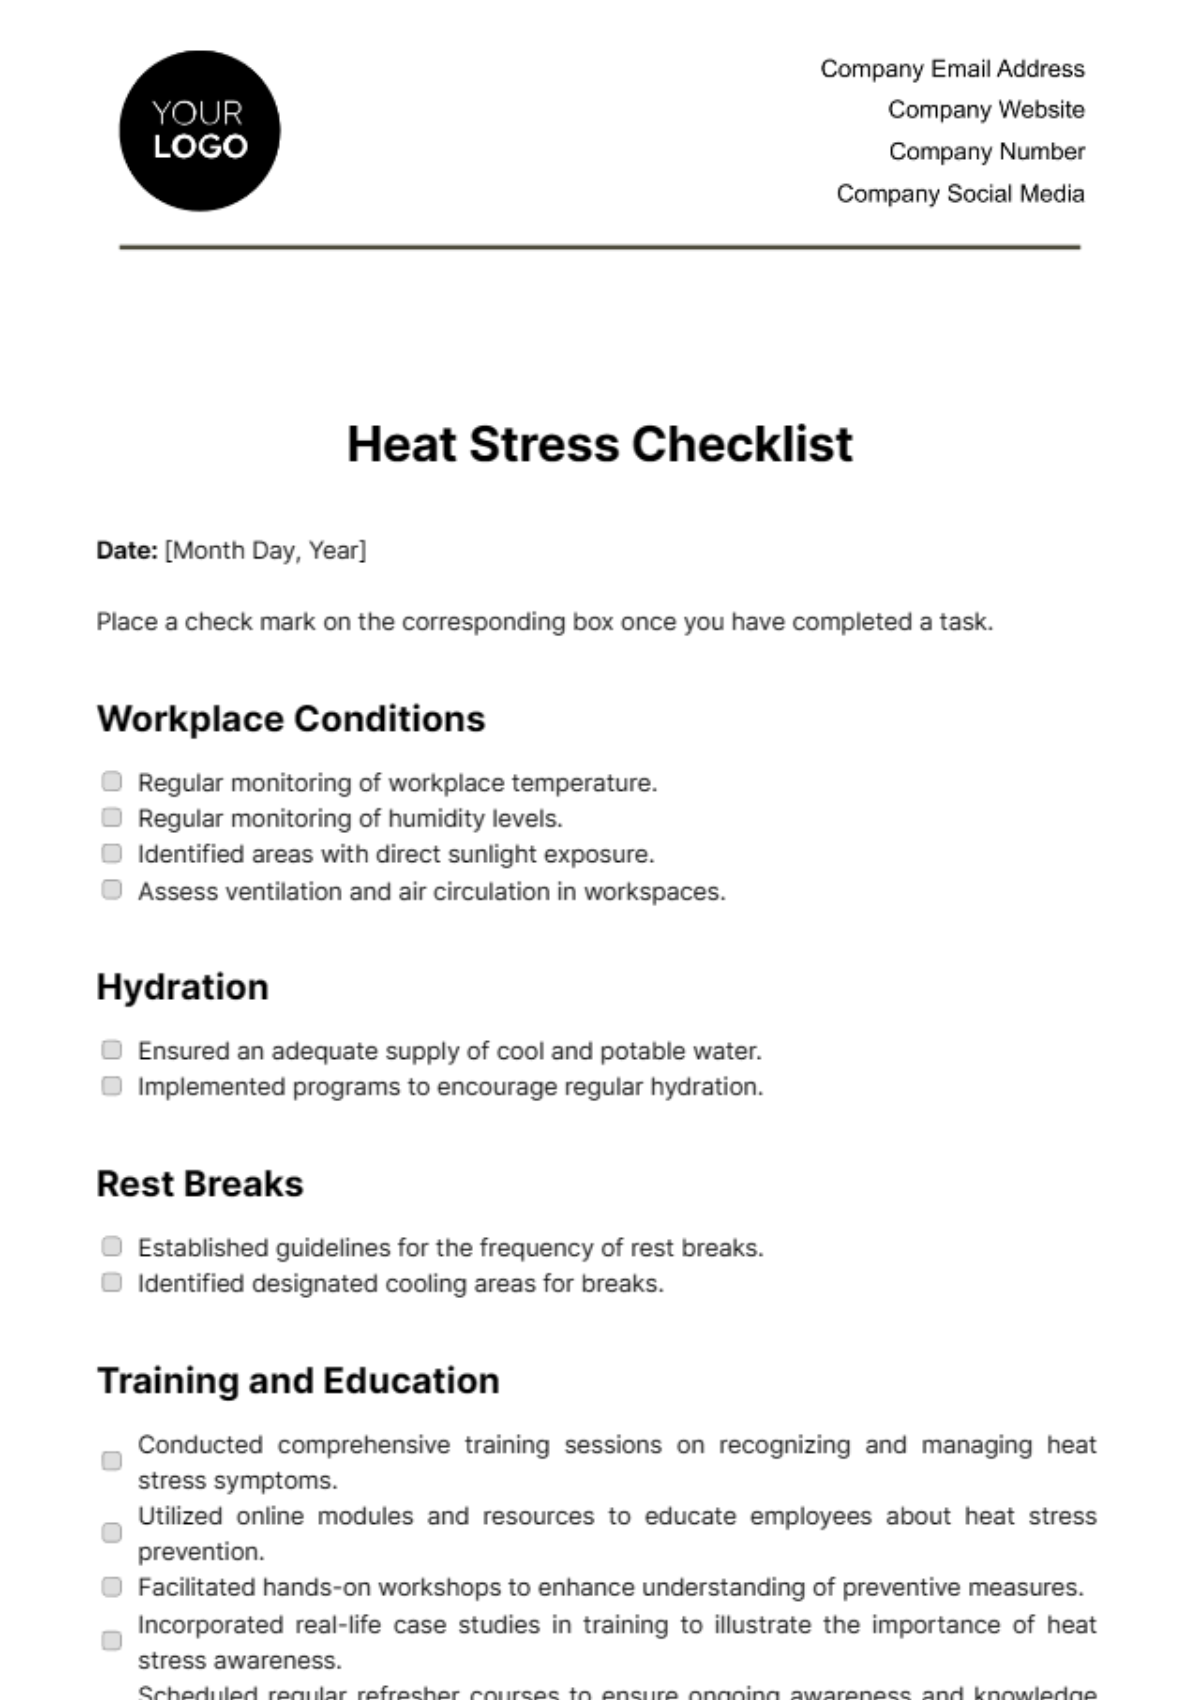 Heat Stress Checklist Template